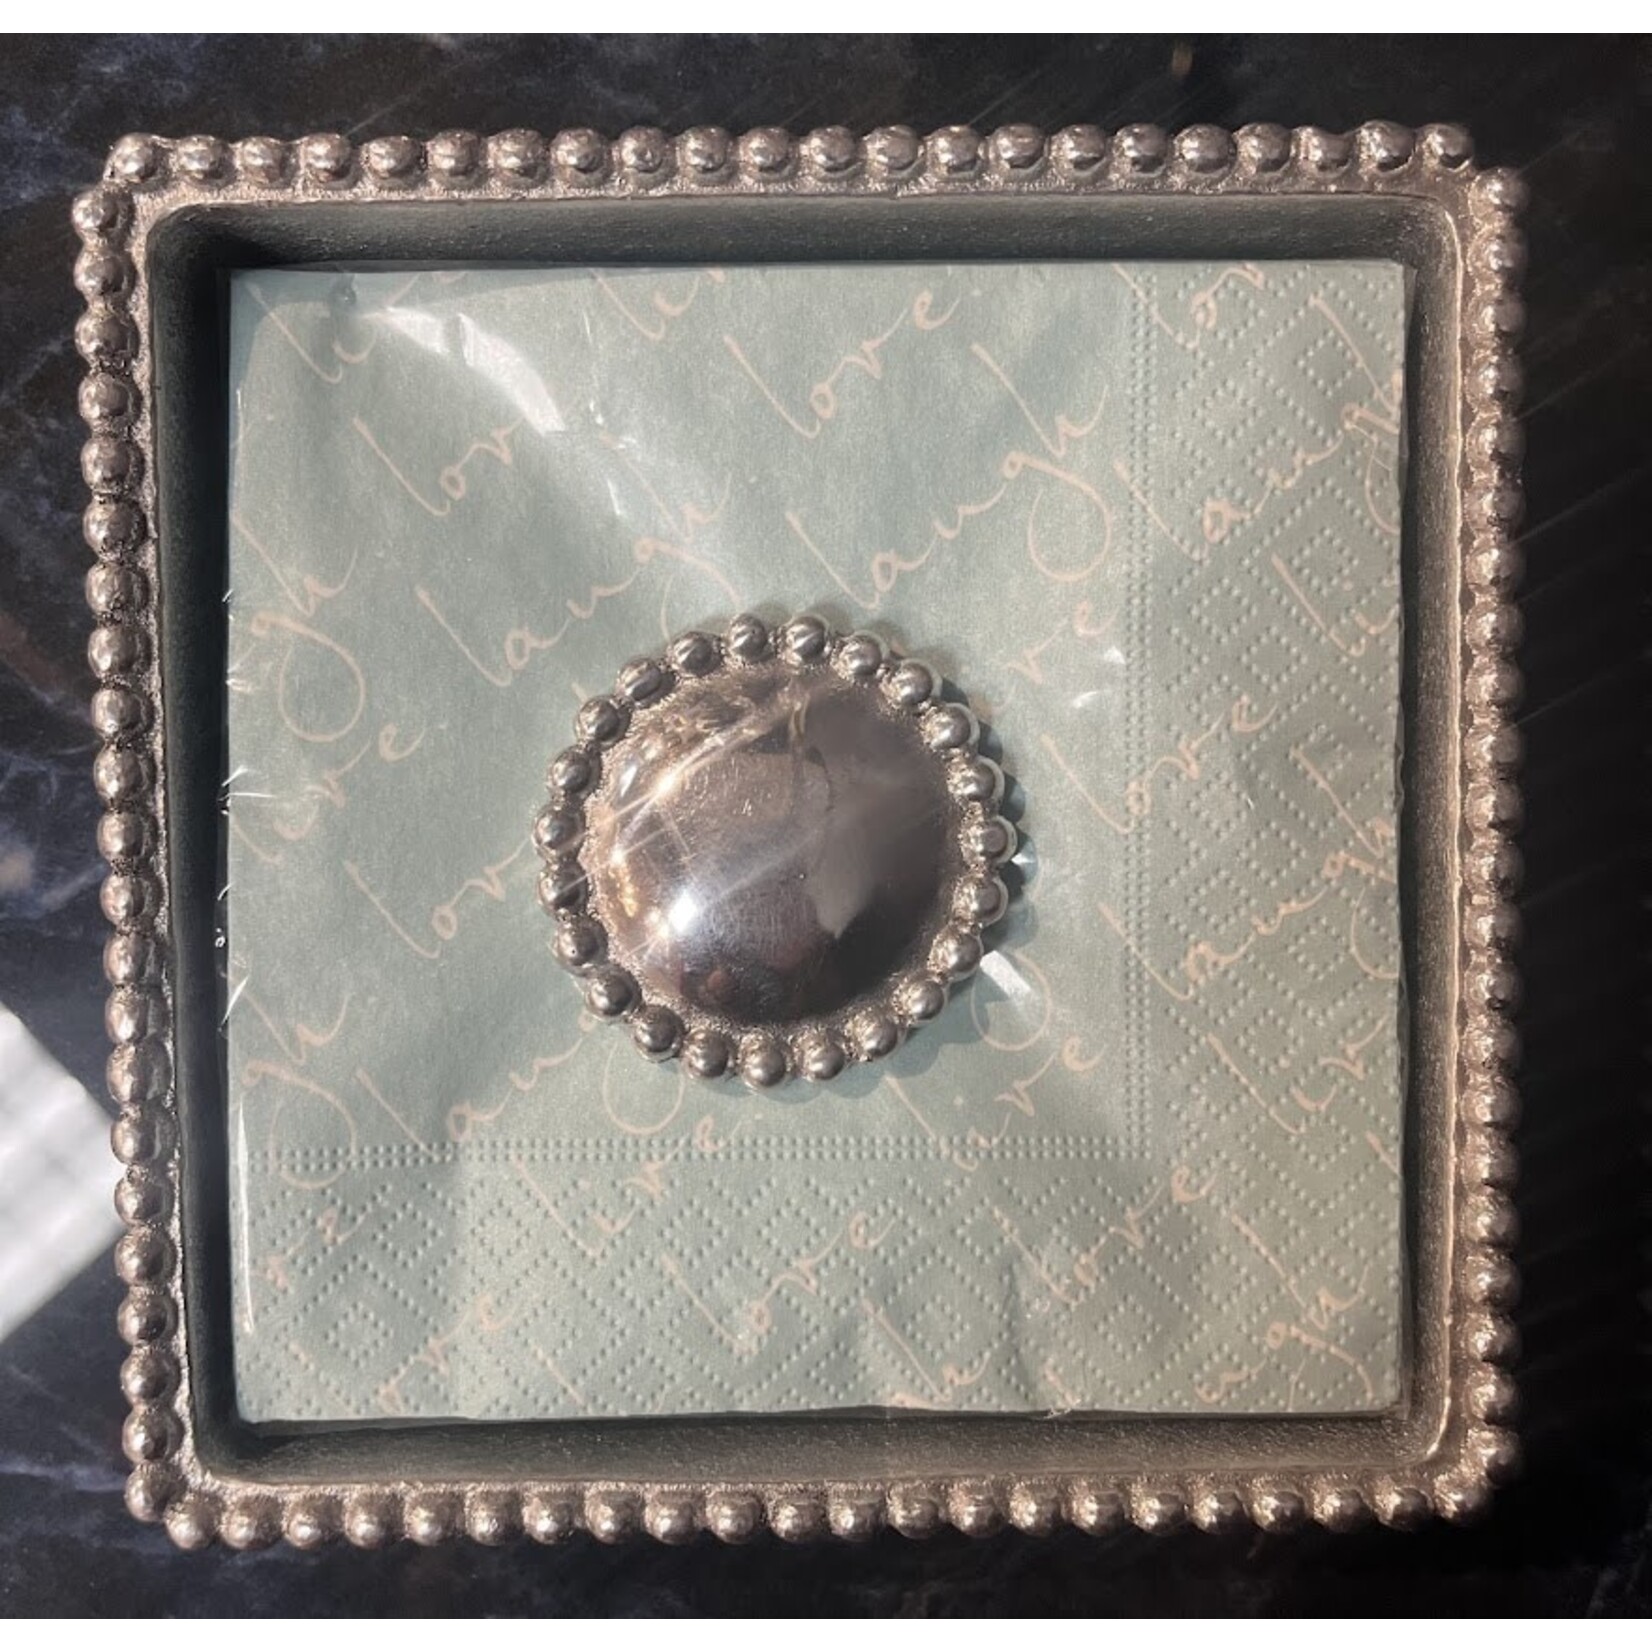 Mariposa Beaded Napkin Box with Pearl Weight